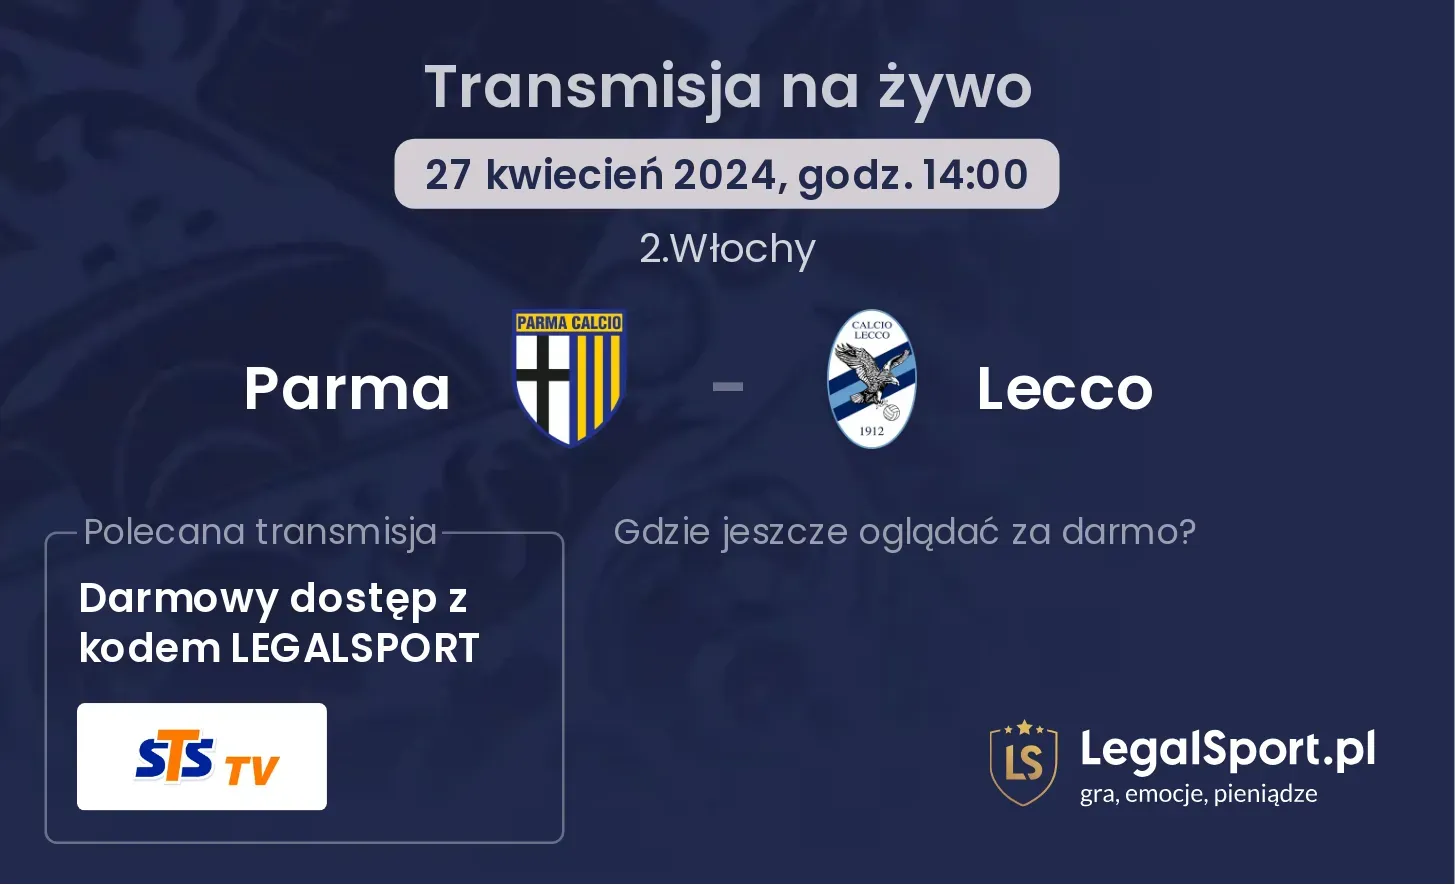 Parma - Lecco transmisja na żywo